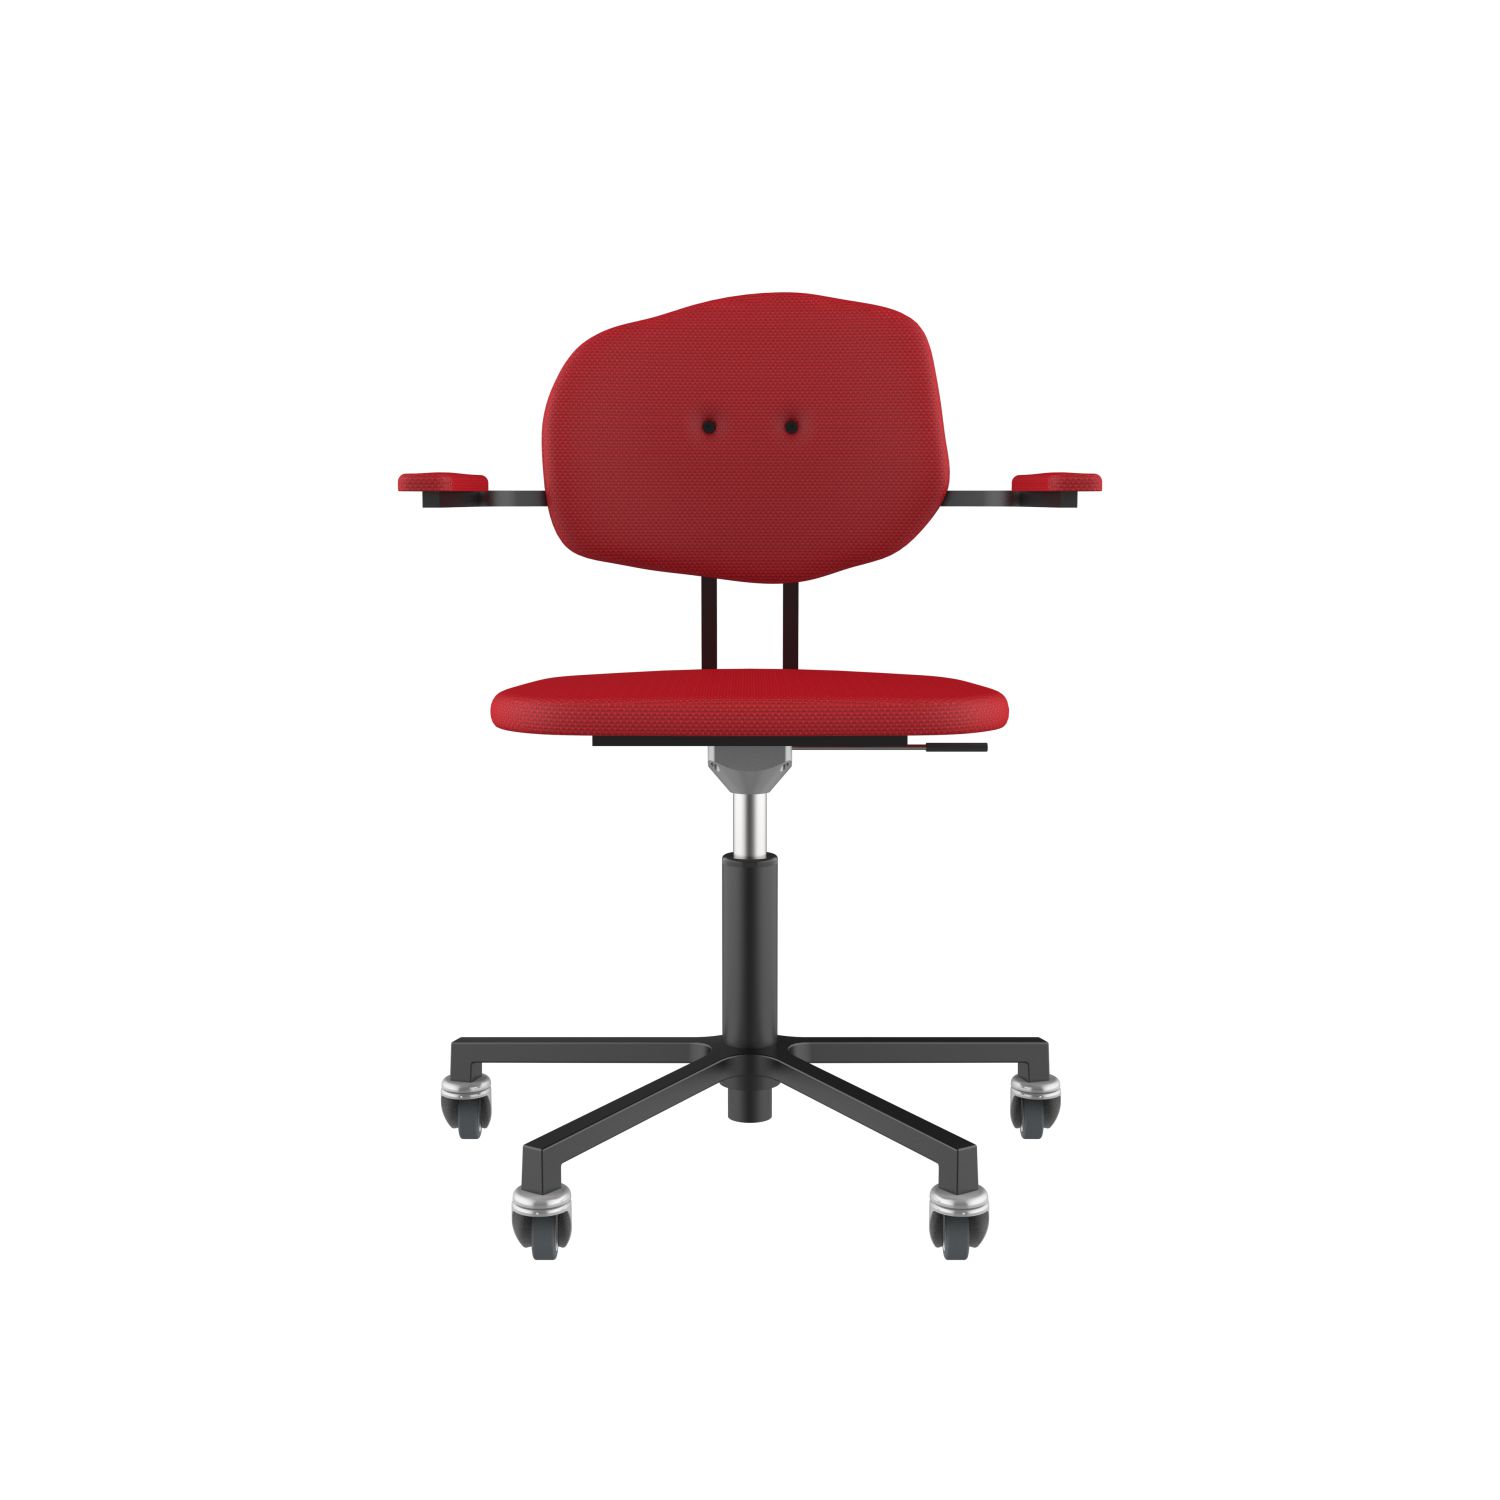 lensvelt maarten baas office chair with armrests backrest e grenada red 010 black ral9005 soft wheels